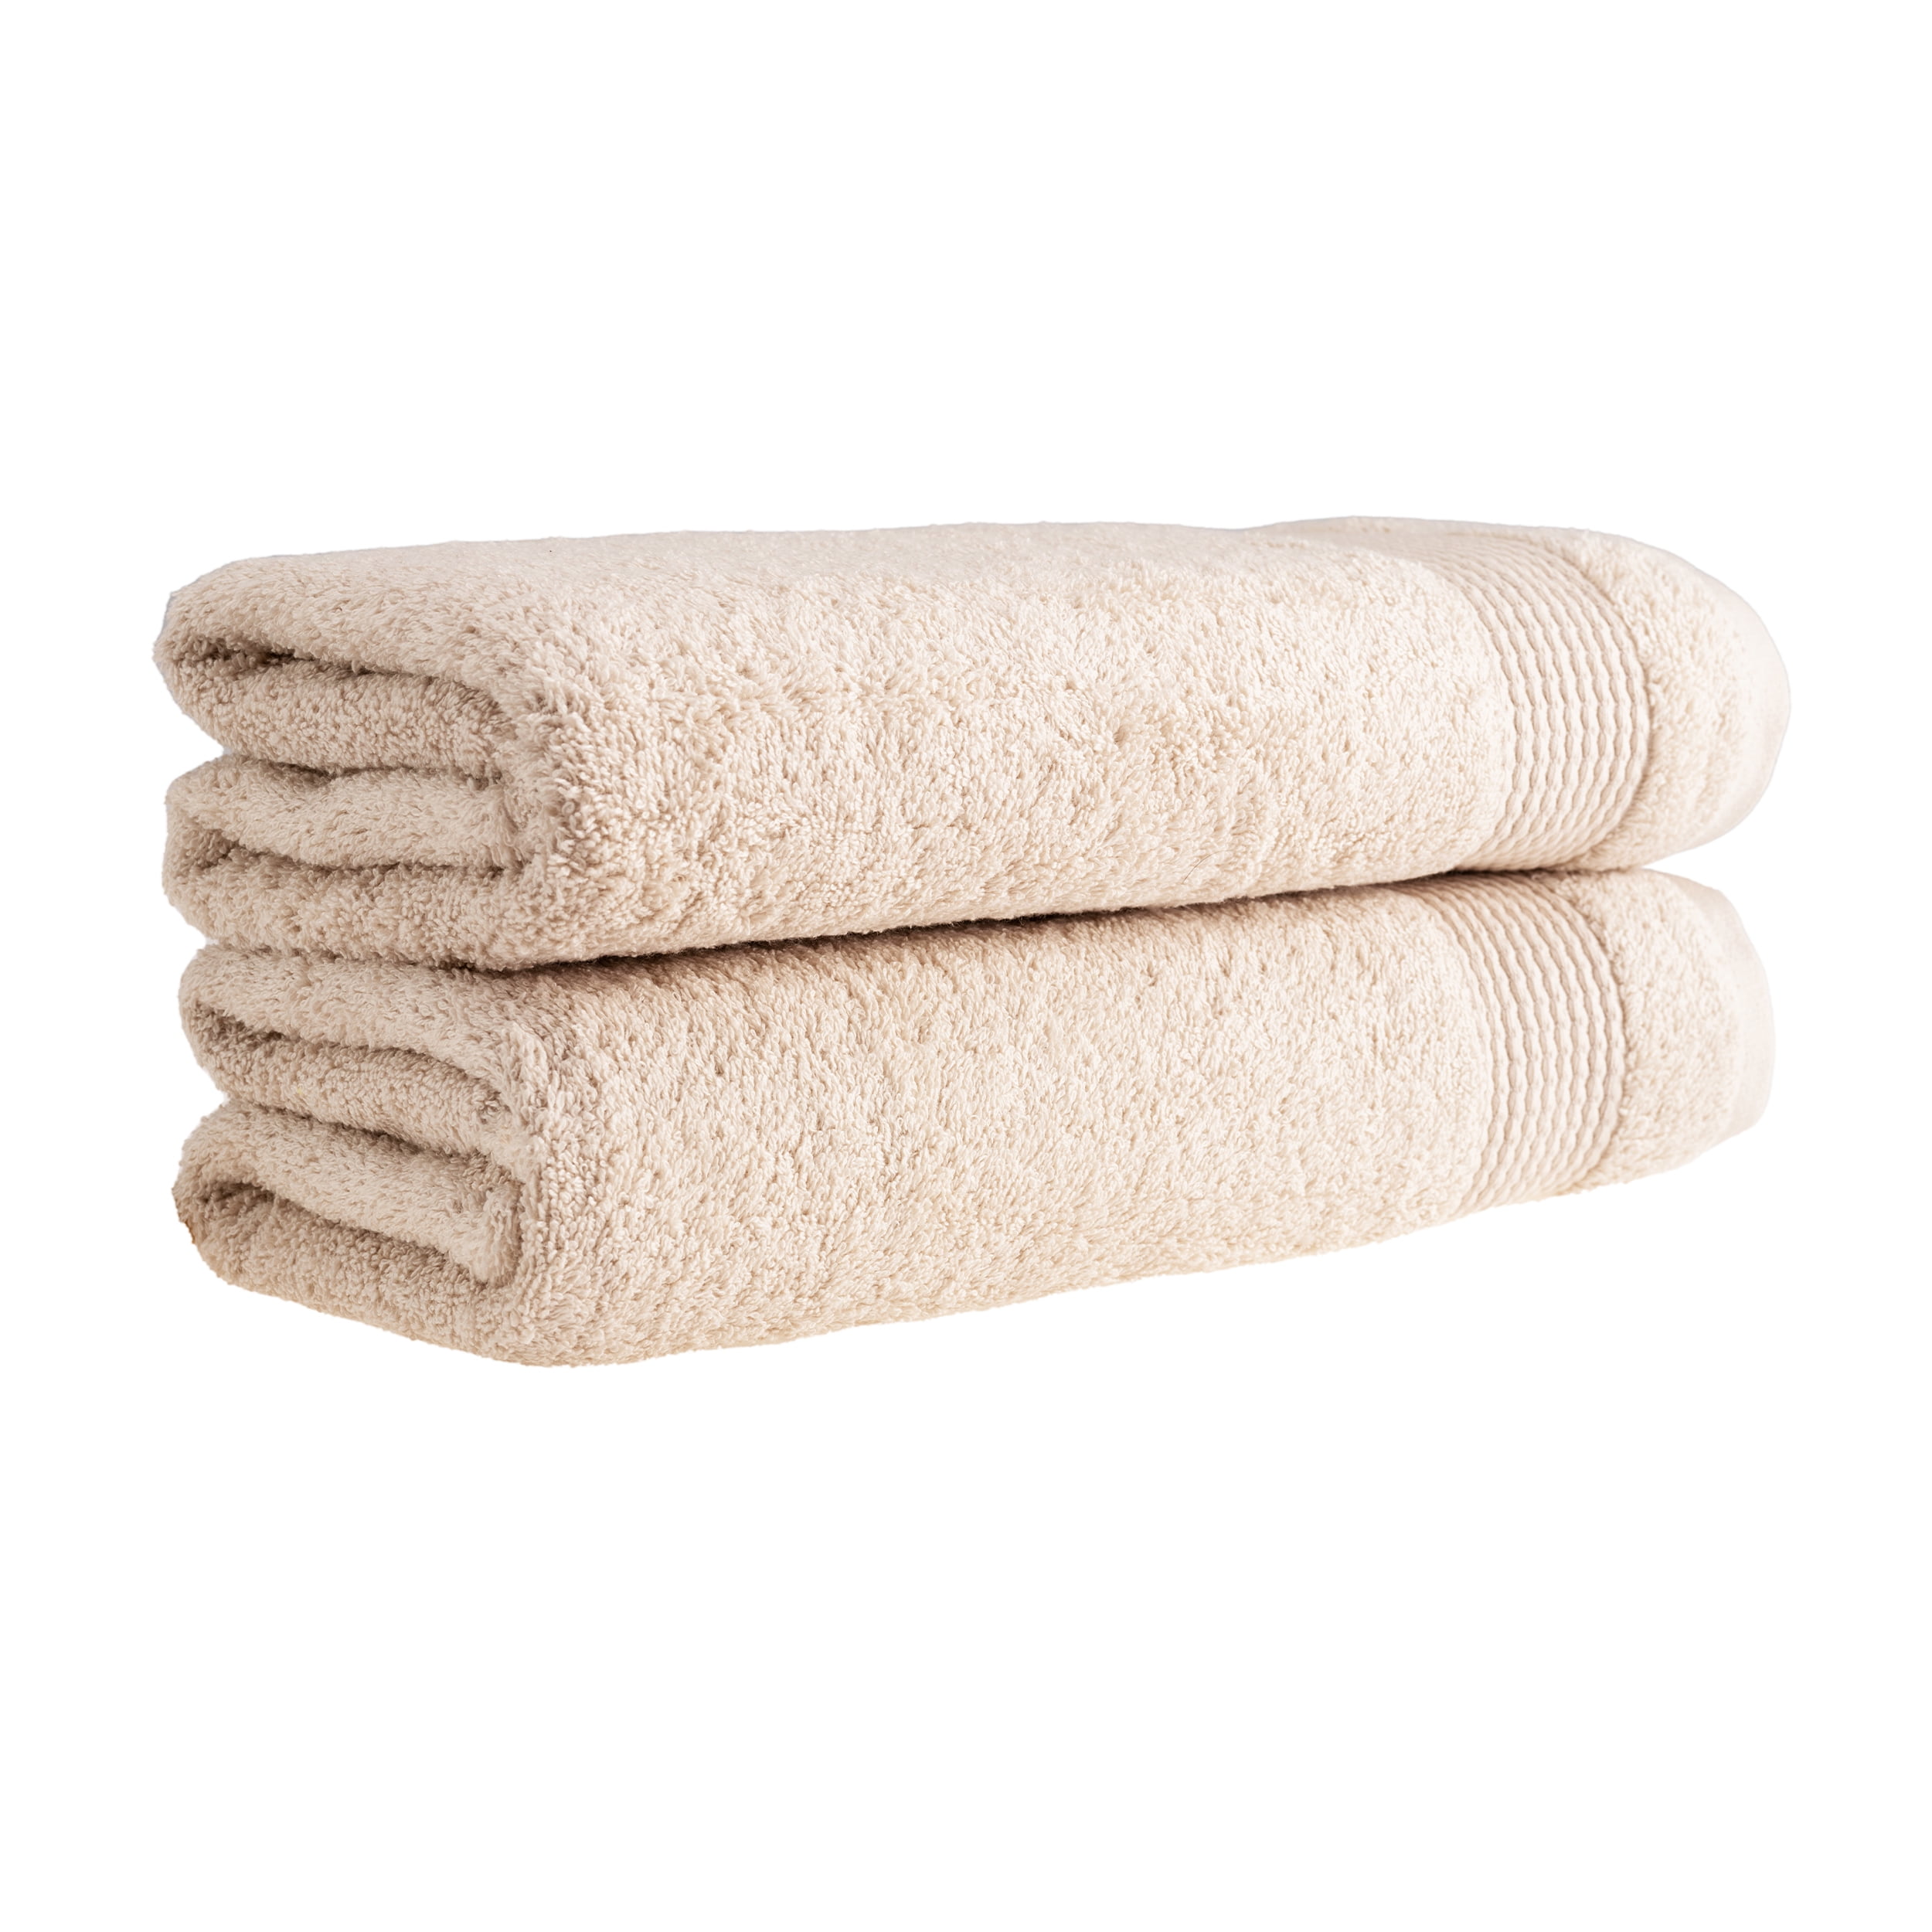 Peshkul Turkish Bathroom Towels, Best Bath Towels Spa& Luxury Hotel | 100% Cotton 27x54 |Set of 4 Soft Bath Towels for Bathrooms | Super Absorbent 